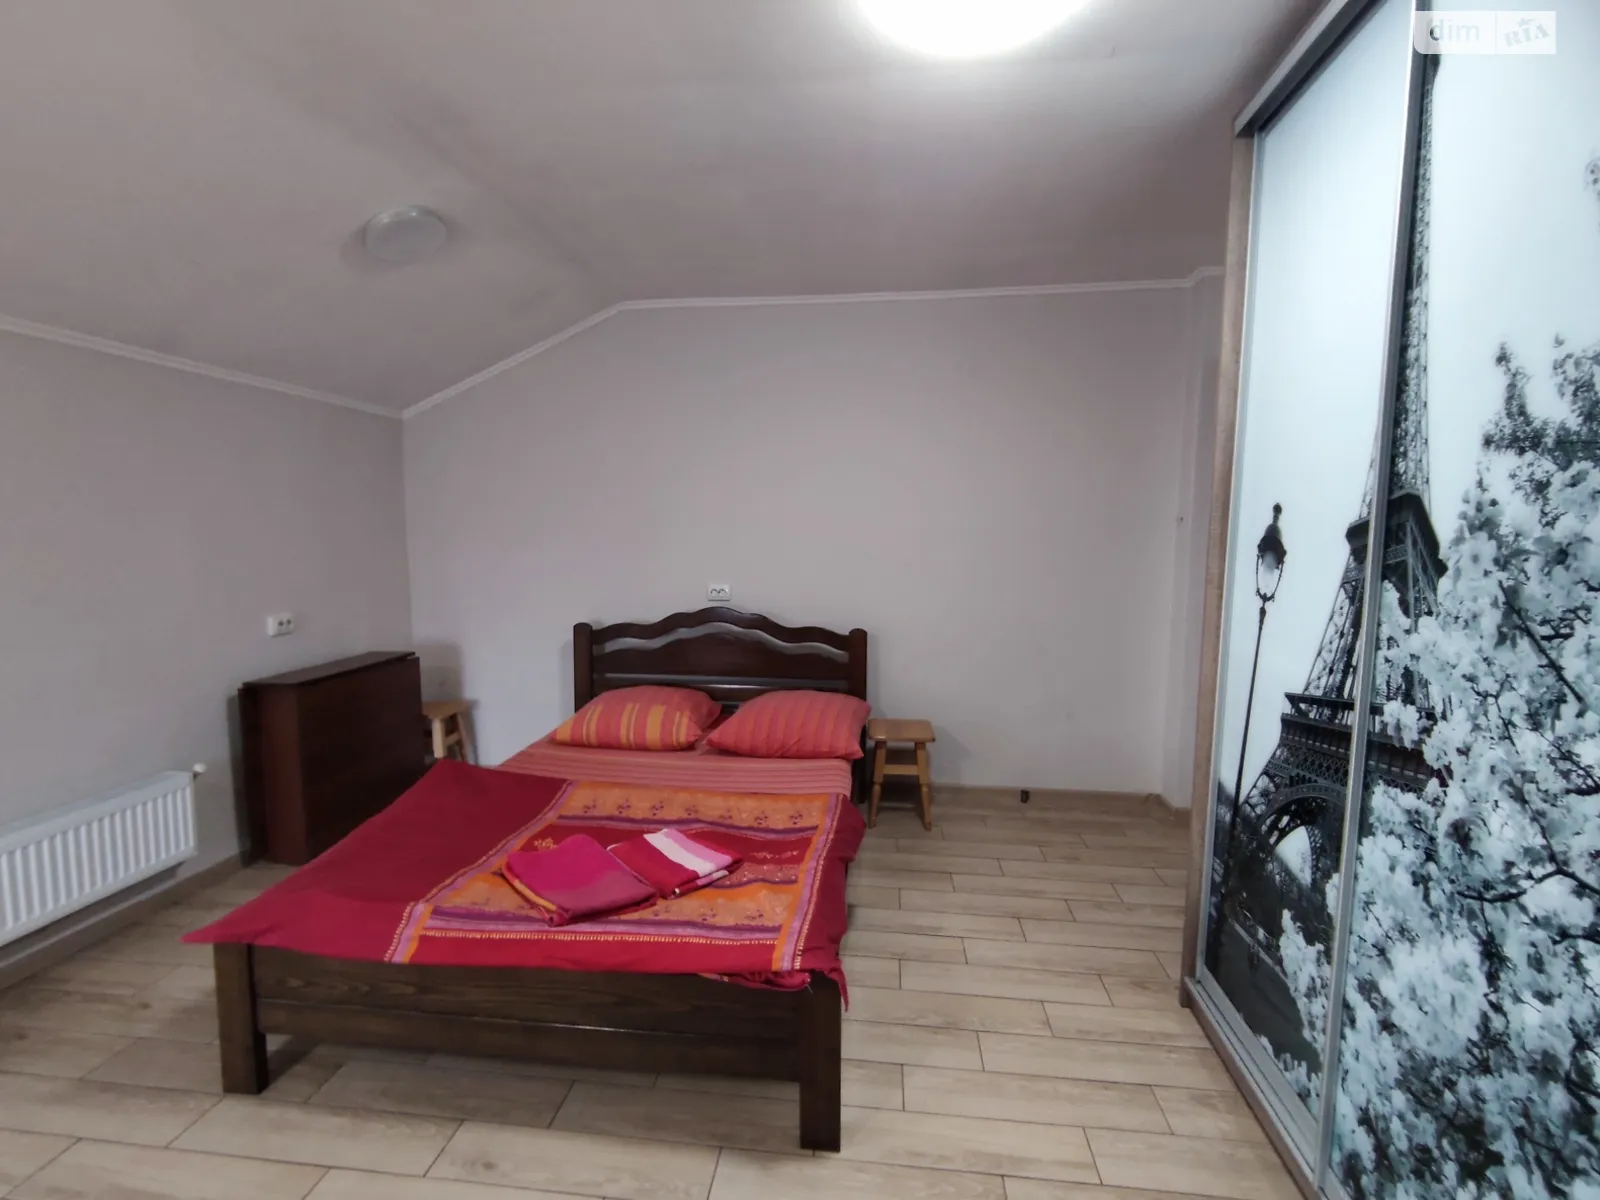 1-кімнатна квартира у Тернополі, цена: 650 грн - фото 1